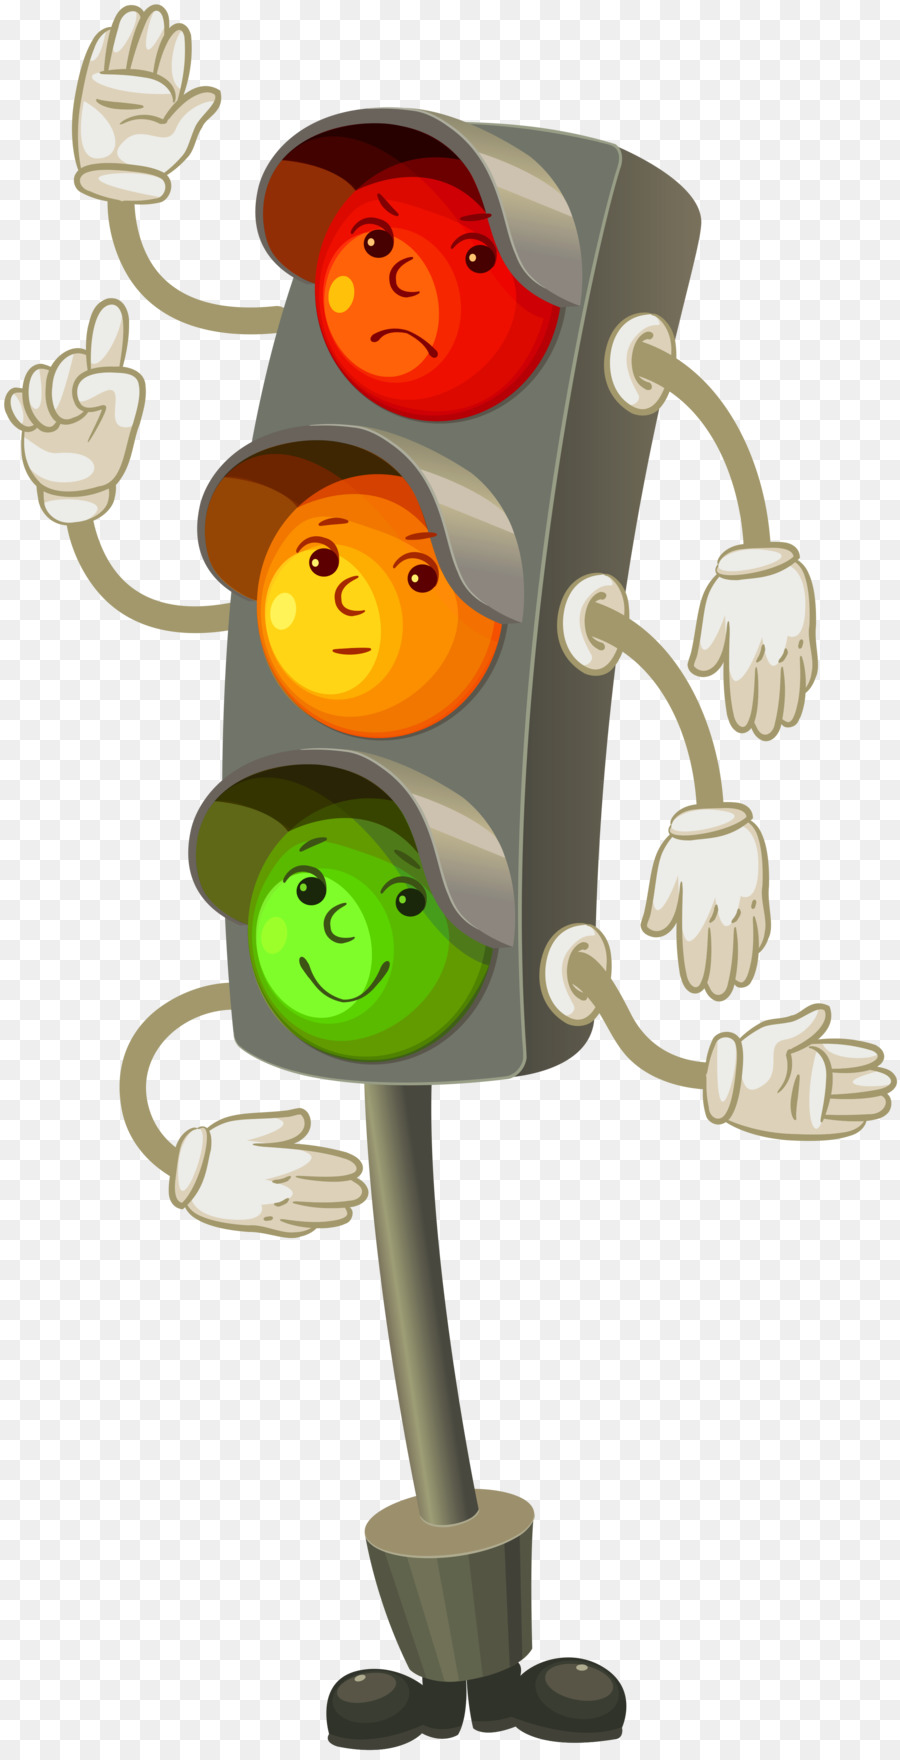 Traffic light Cartoon Clip art - traffic light png download - 2558*5000